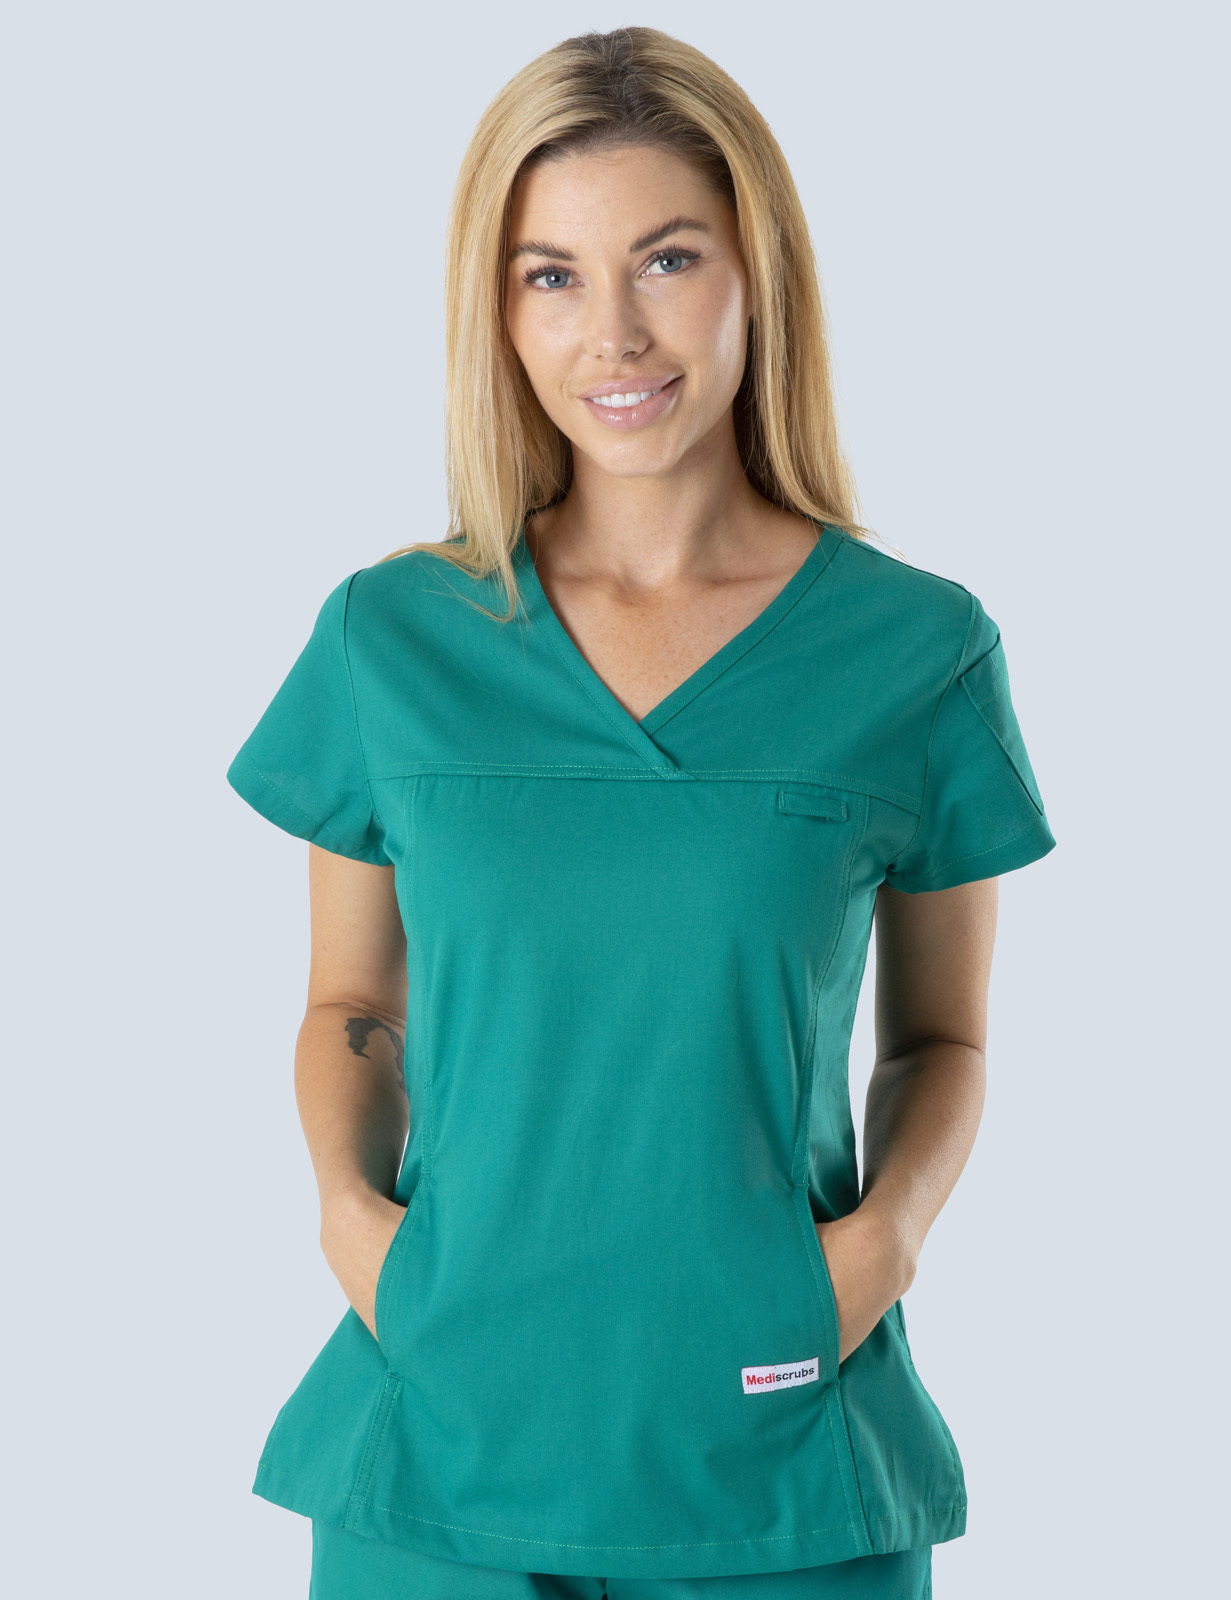 Queensland Children's Hospital Emergency Department Clinical Nurse  Uniform Top Bundle  (Women's Fit Top in Hunter  incl Logos)